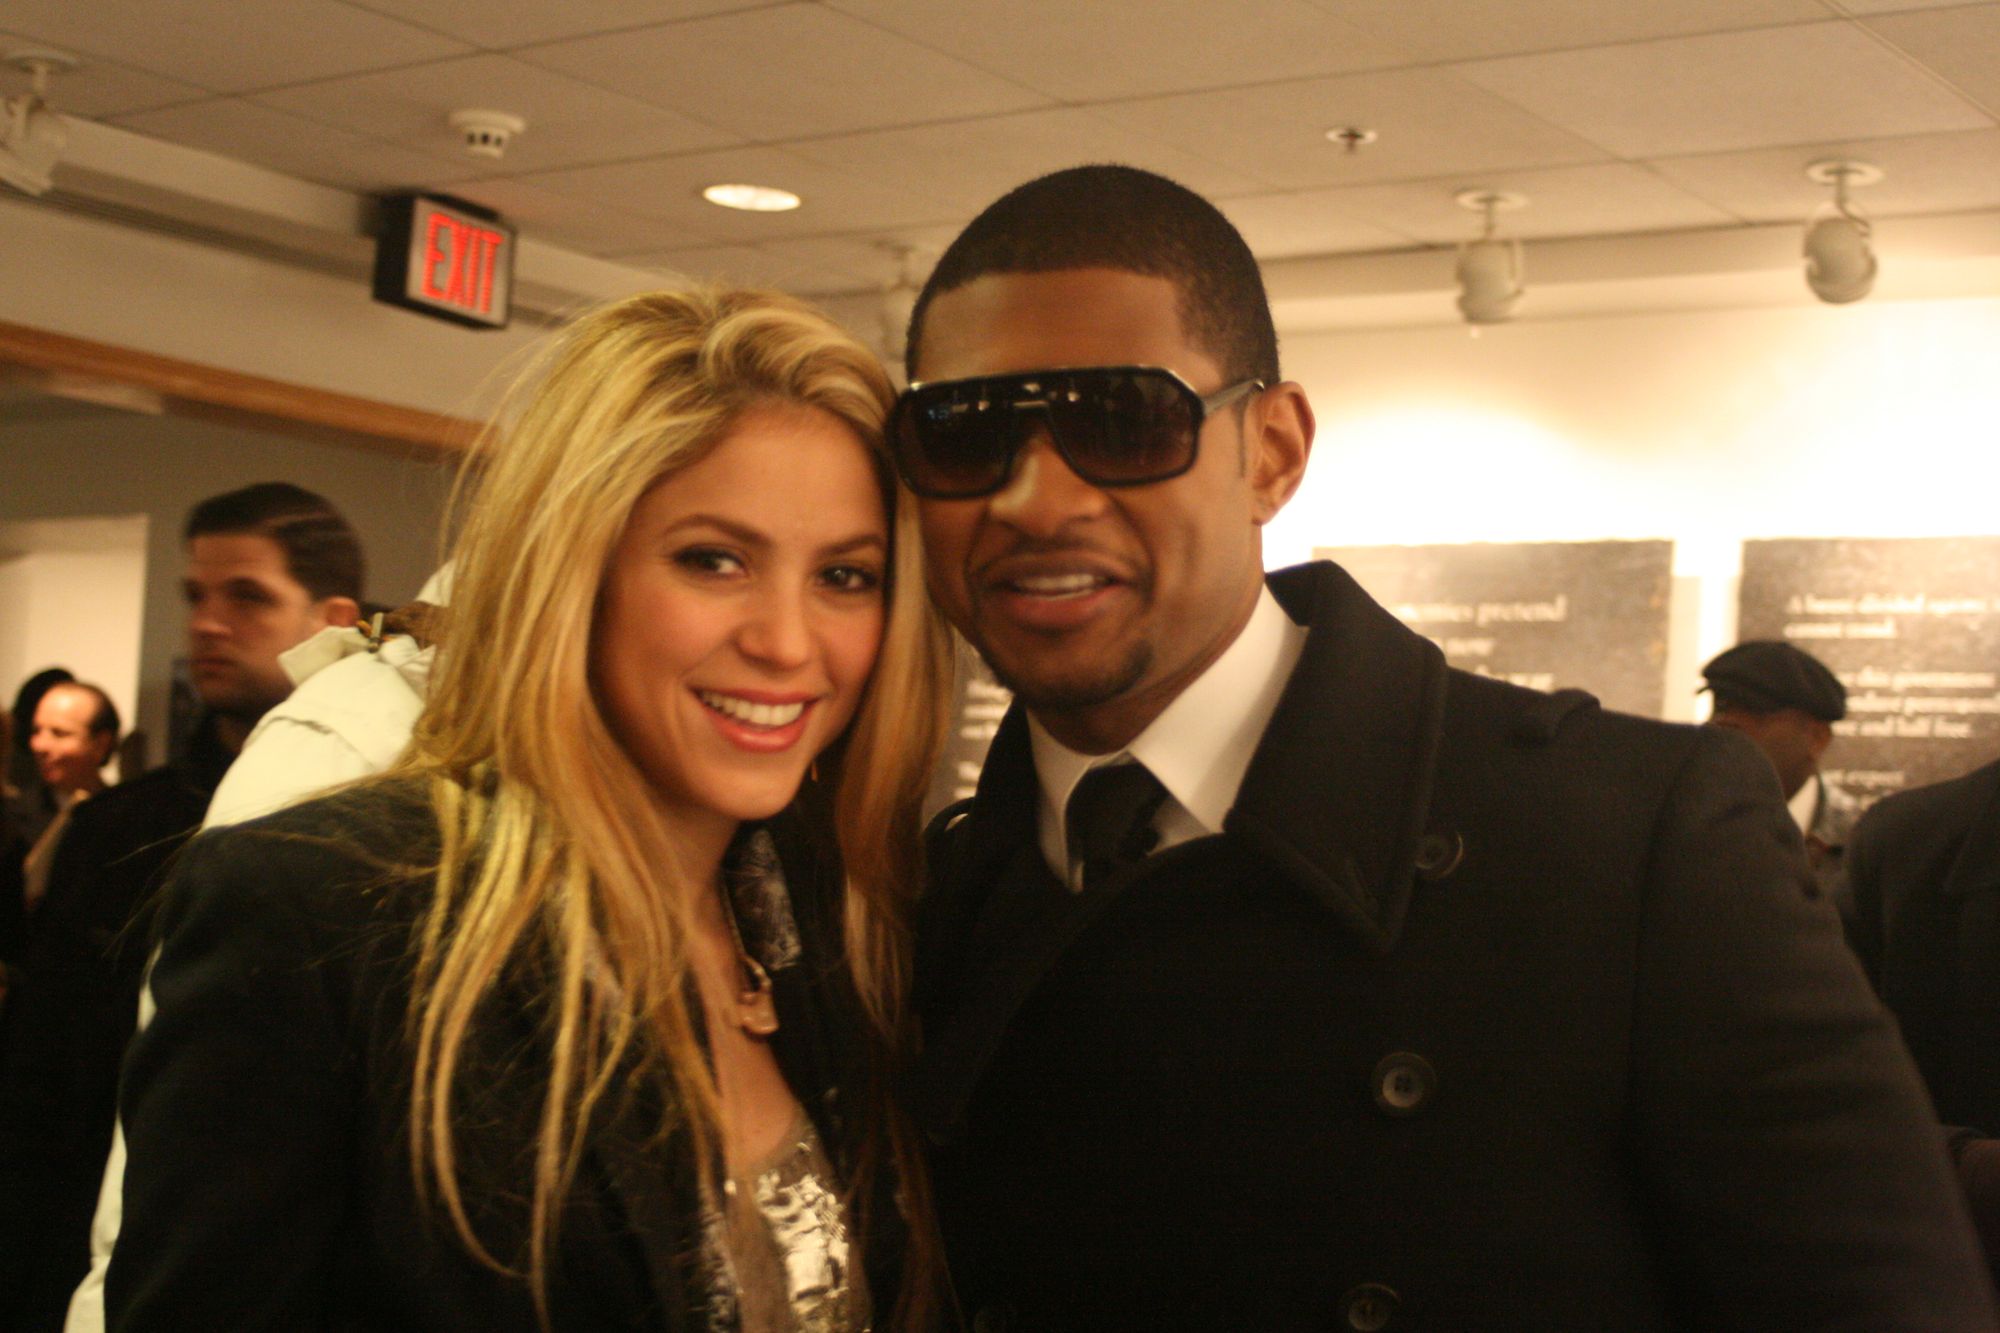 Shakira and Usher